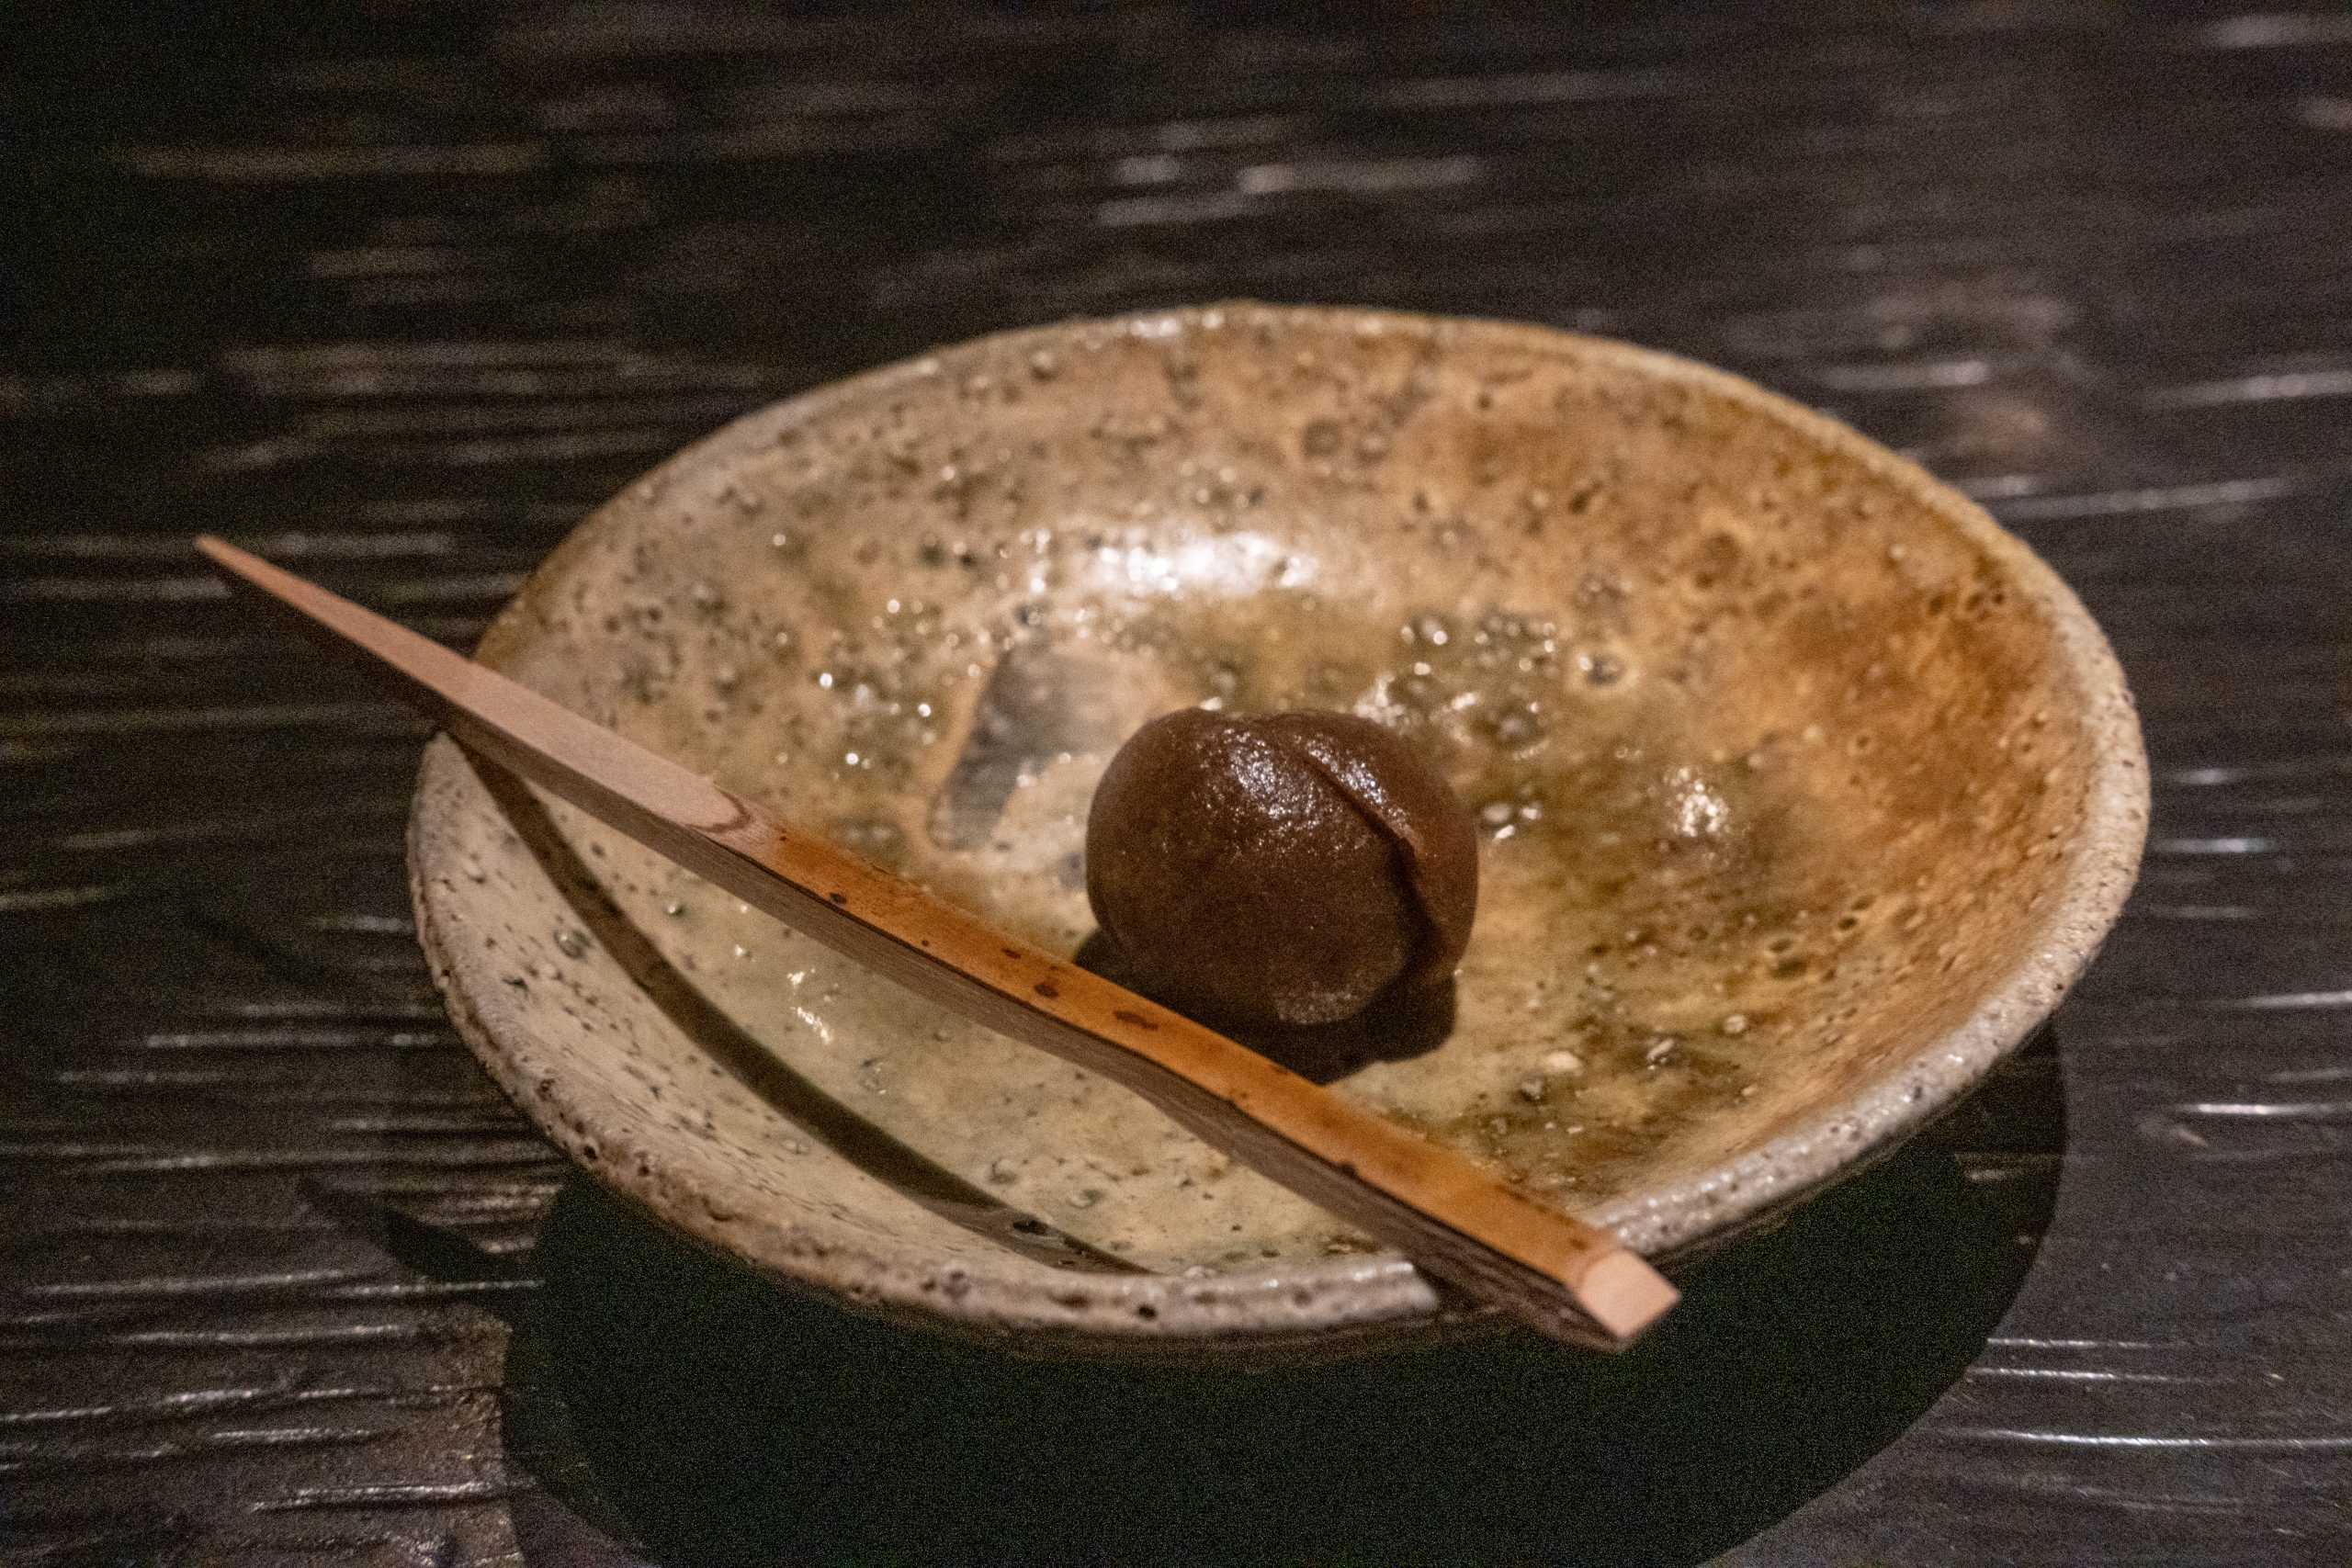 More wagashi at Sakurai tea experience